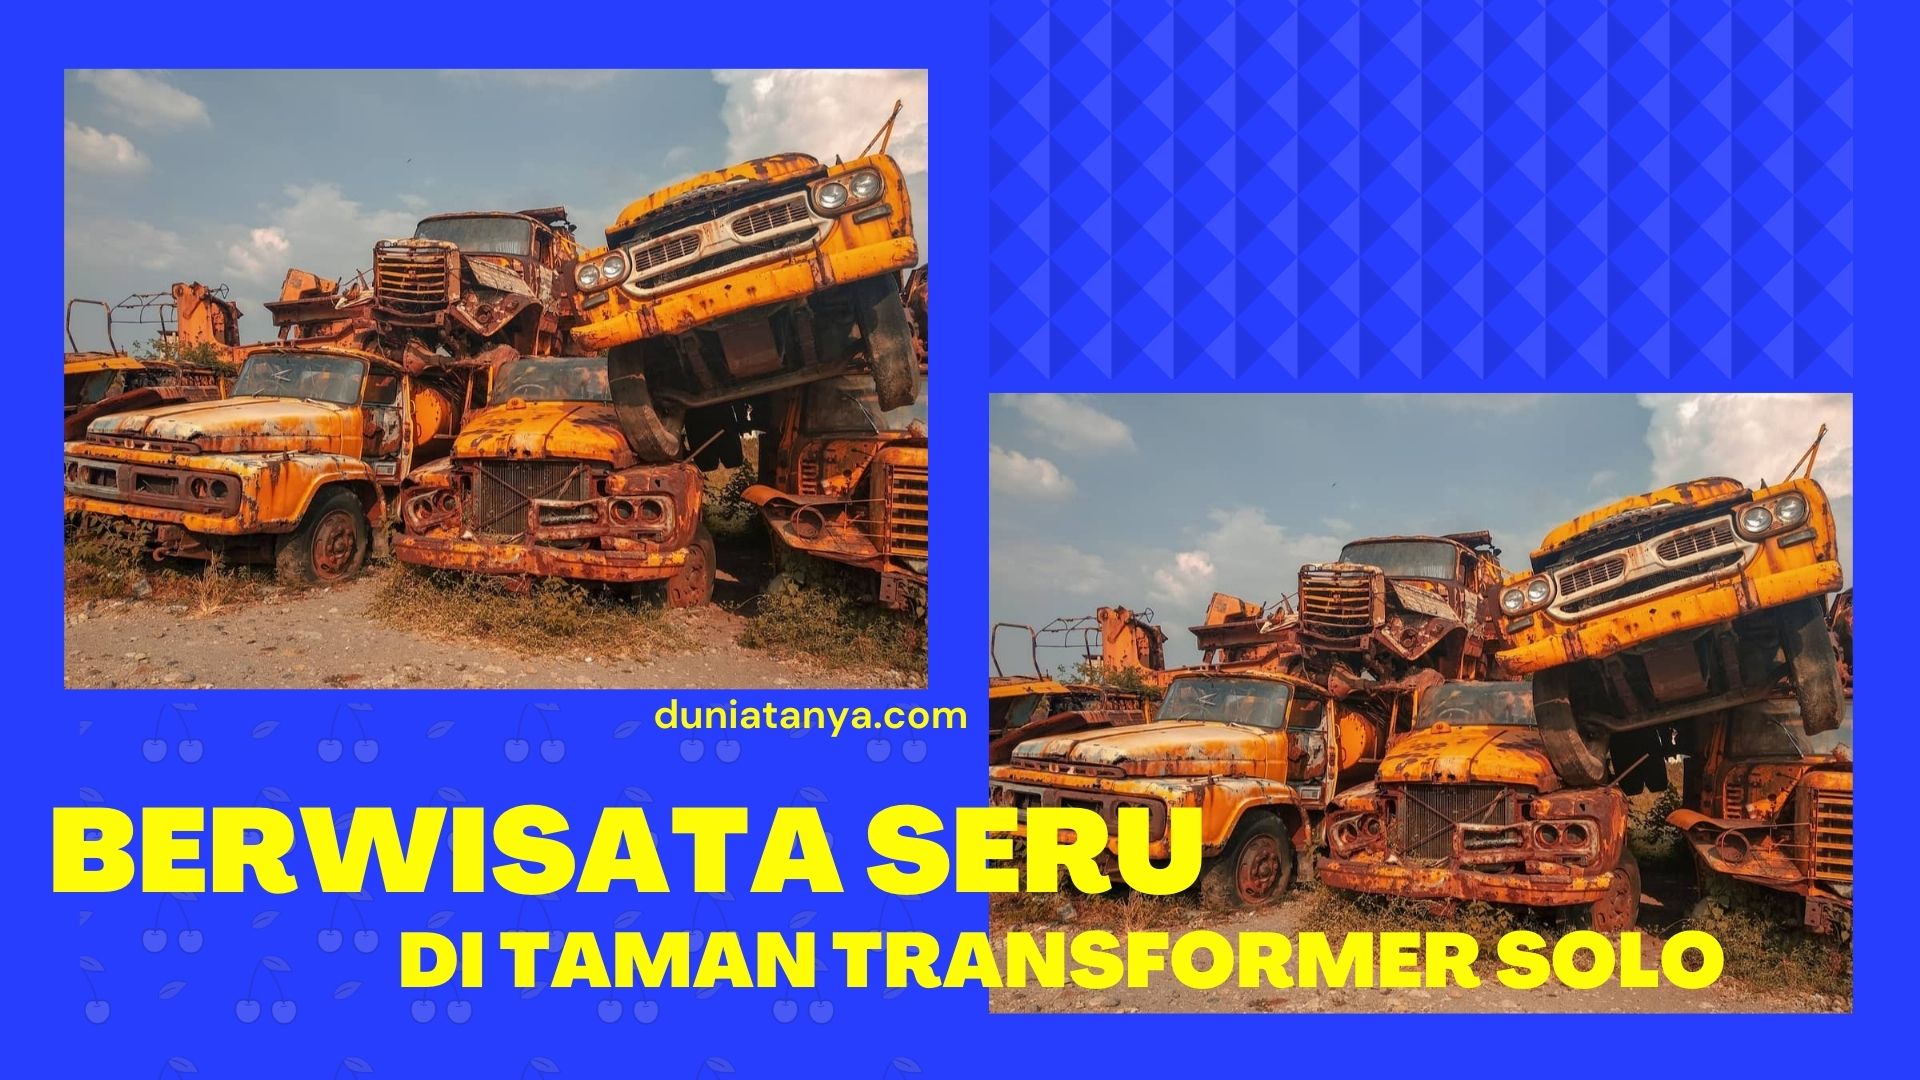 You are currently viewing Berwisata Seru Di Taman Transformer Solo